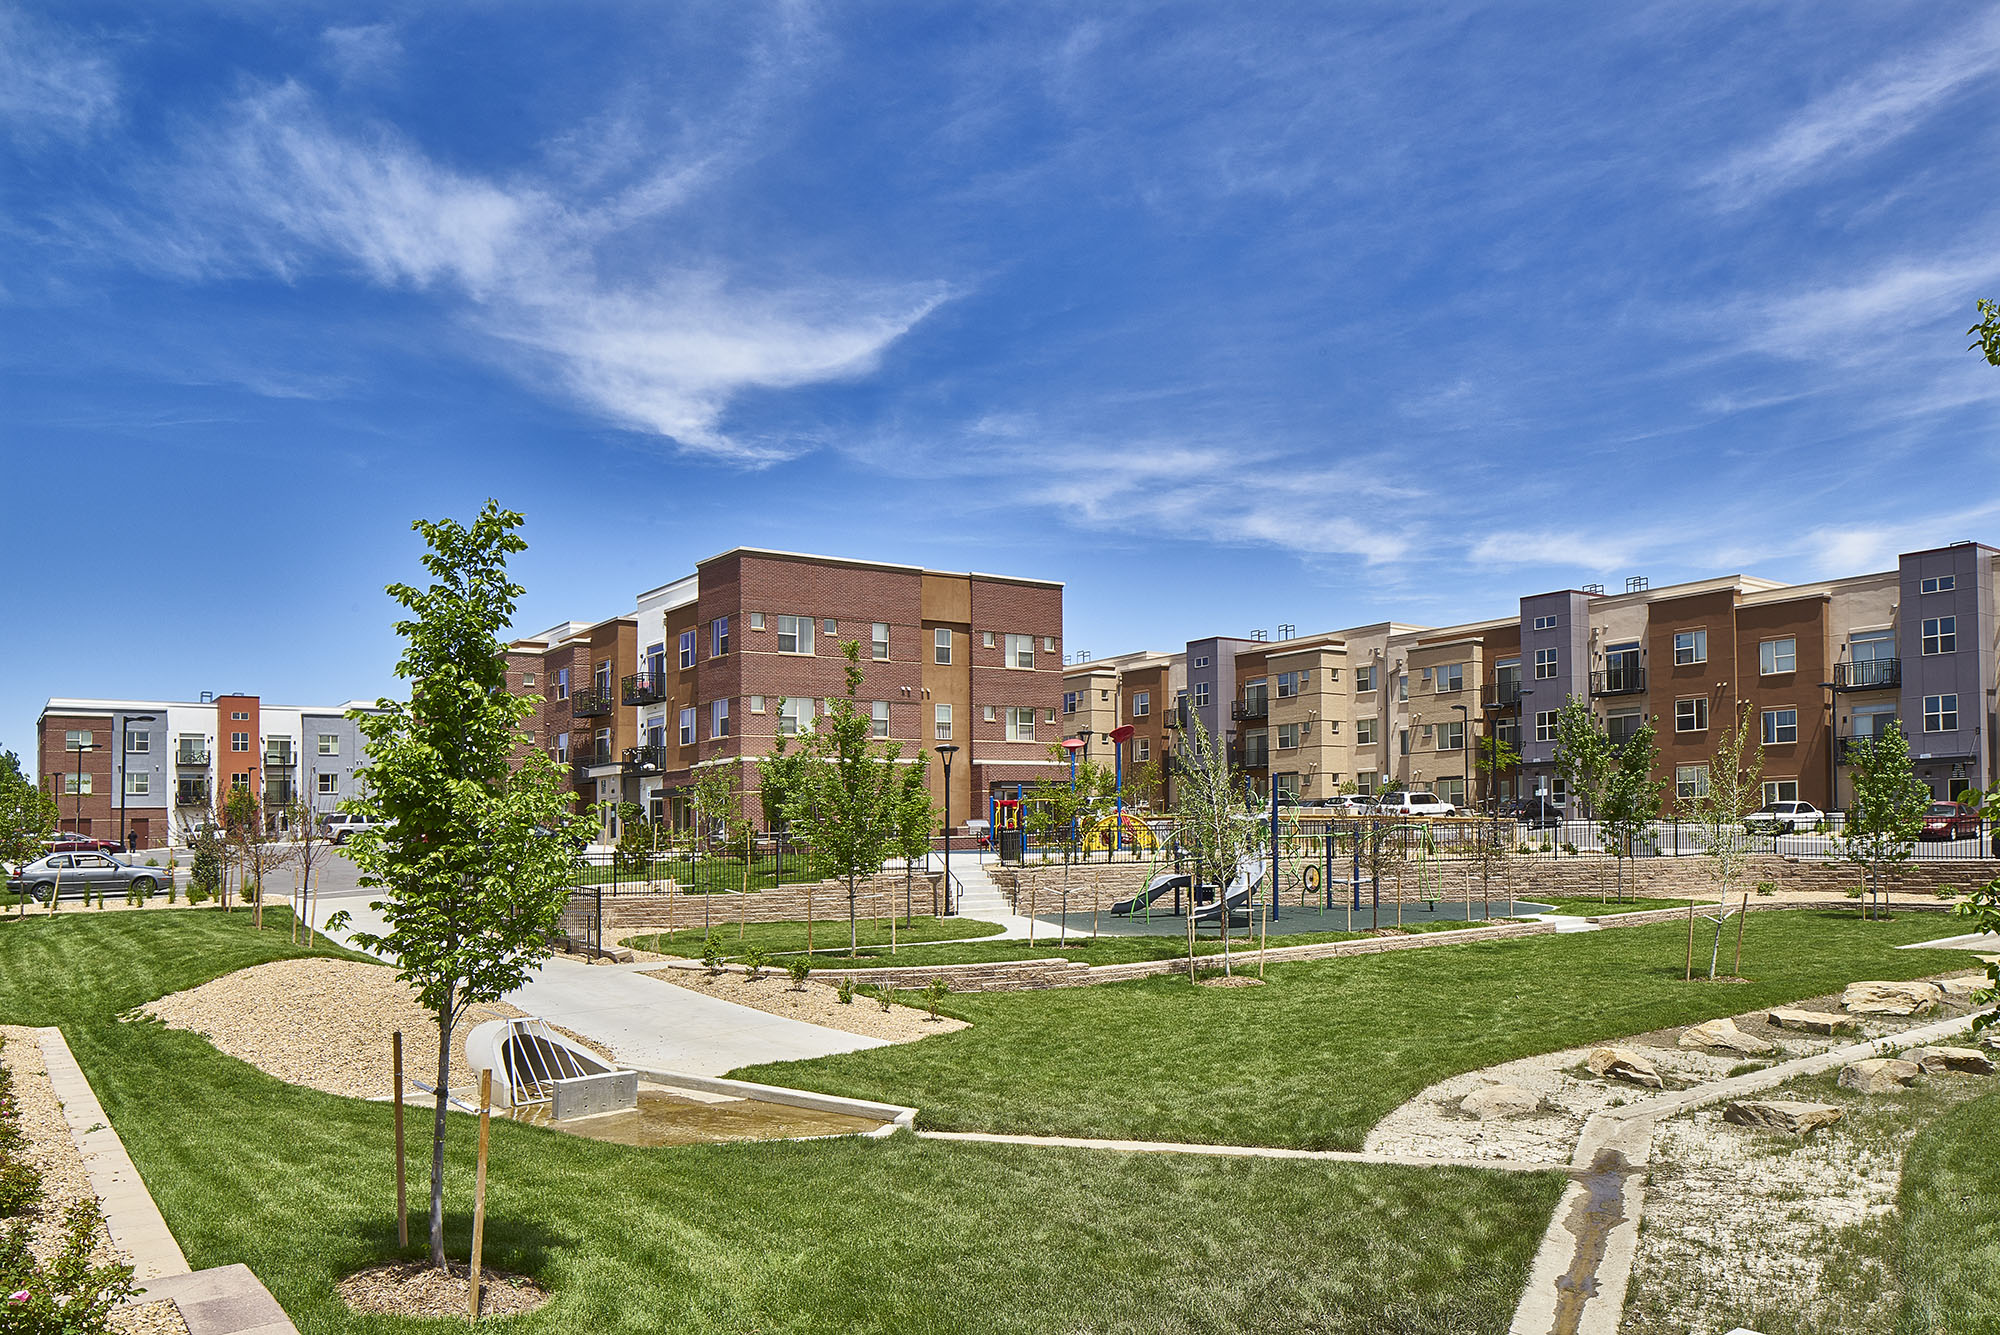 Garden, water quality and playground areas at crissman apartmetns